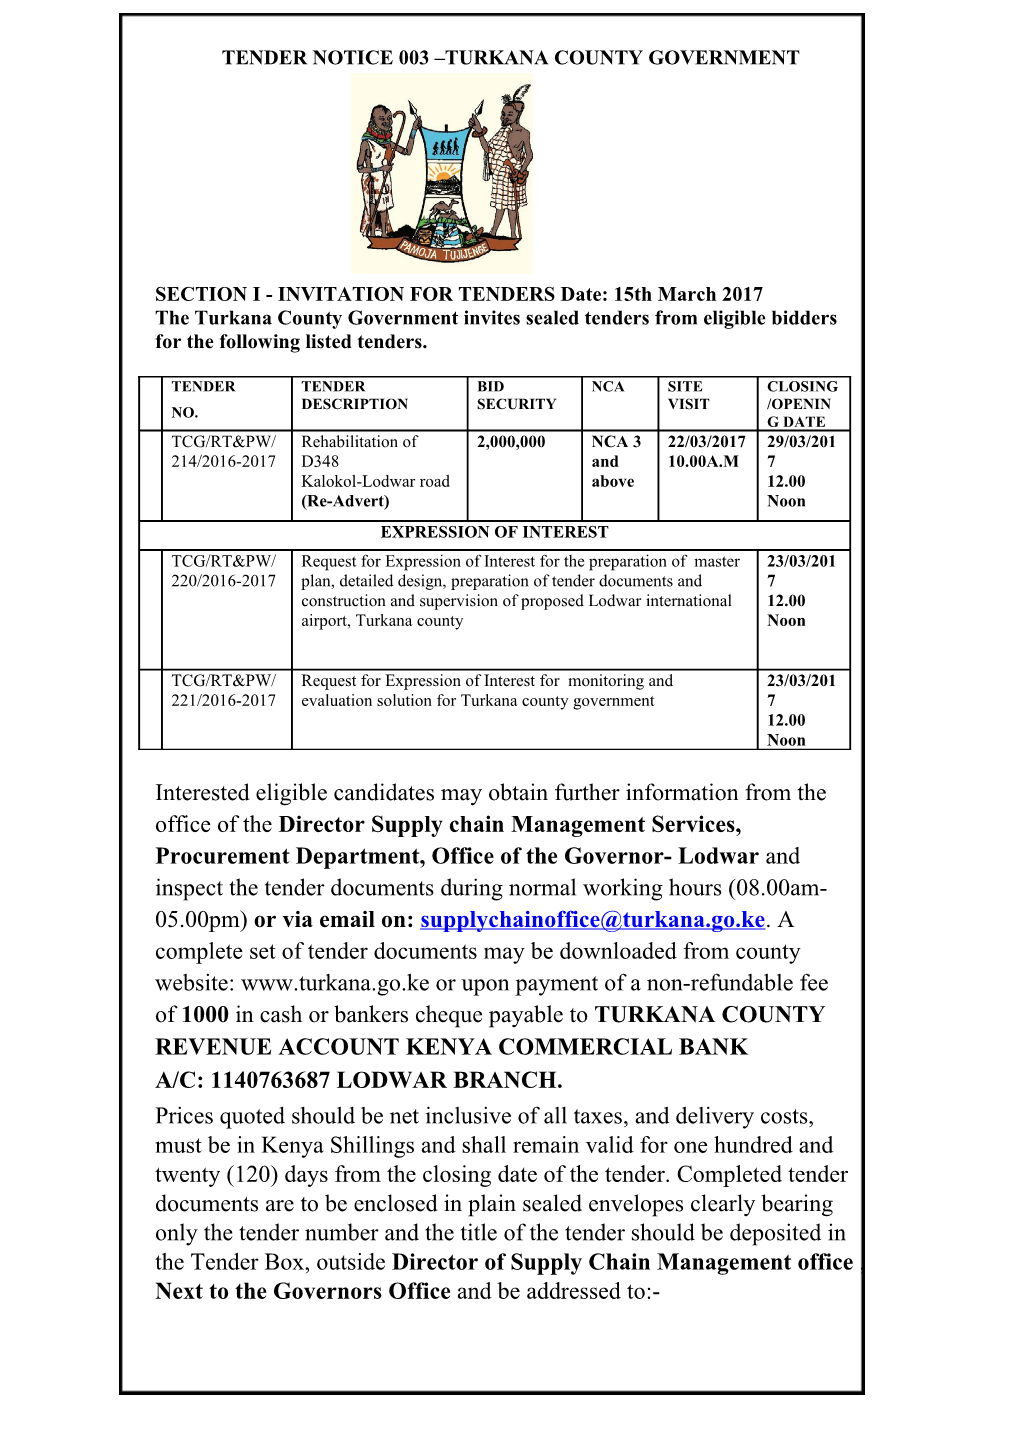 Tender Notice 003 Turkana County Government